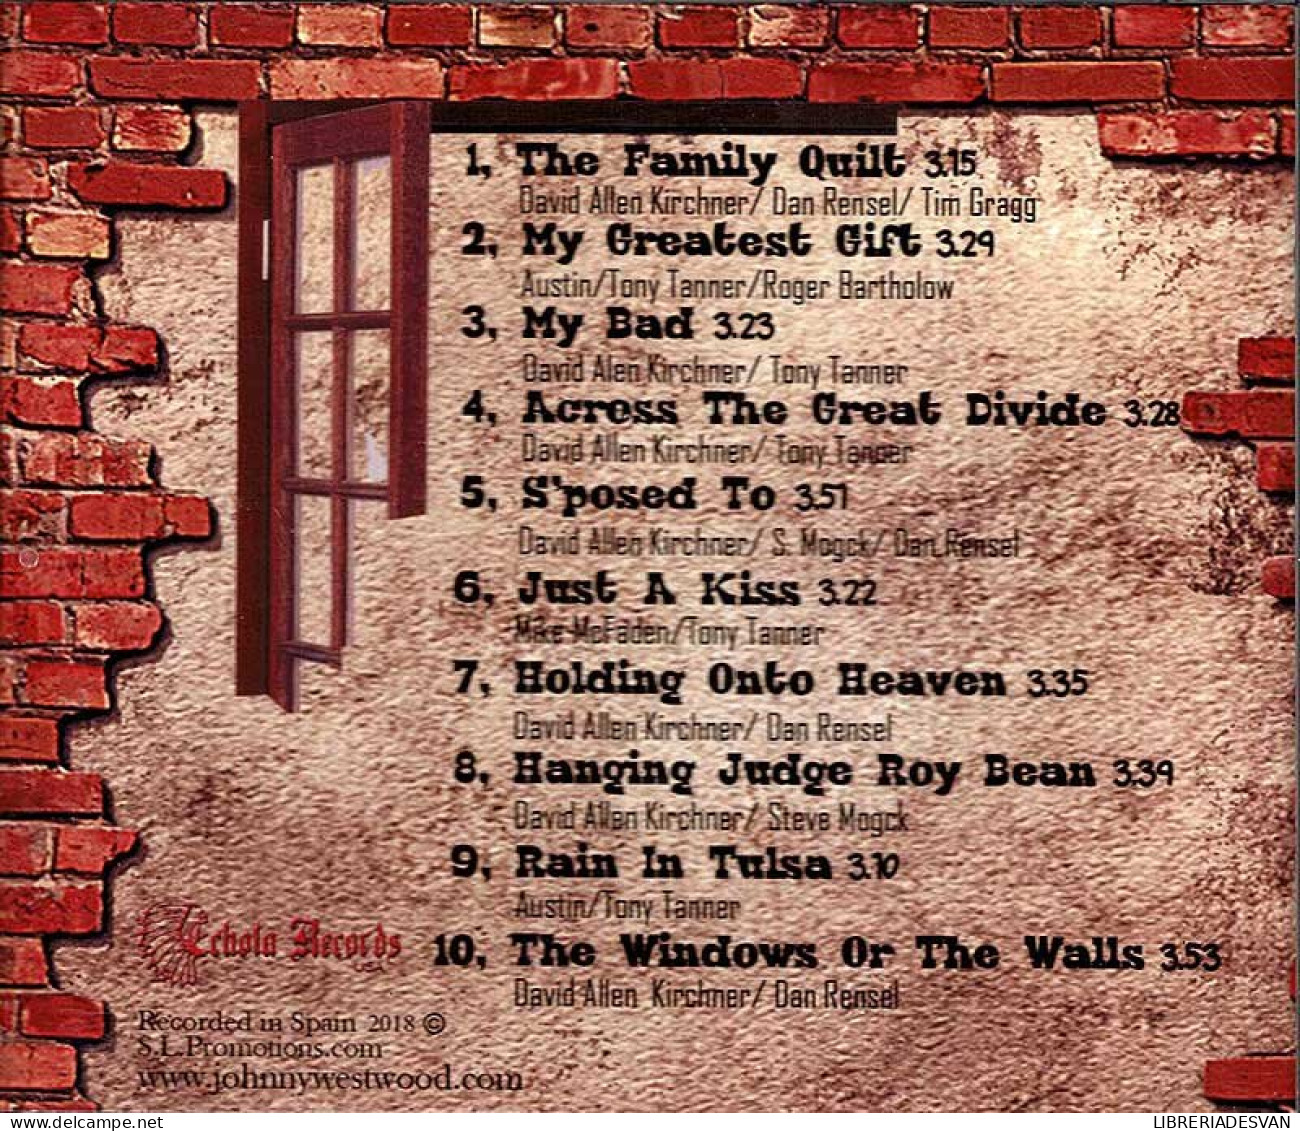 Johnny Westwood - The Windows Or The Walls. CD (con Autógrafo) - Country Y Folk